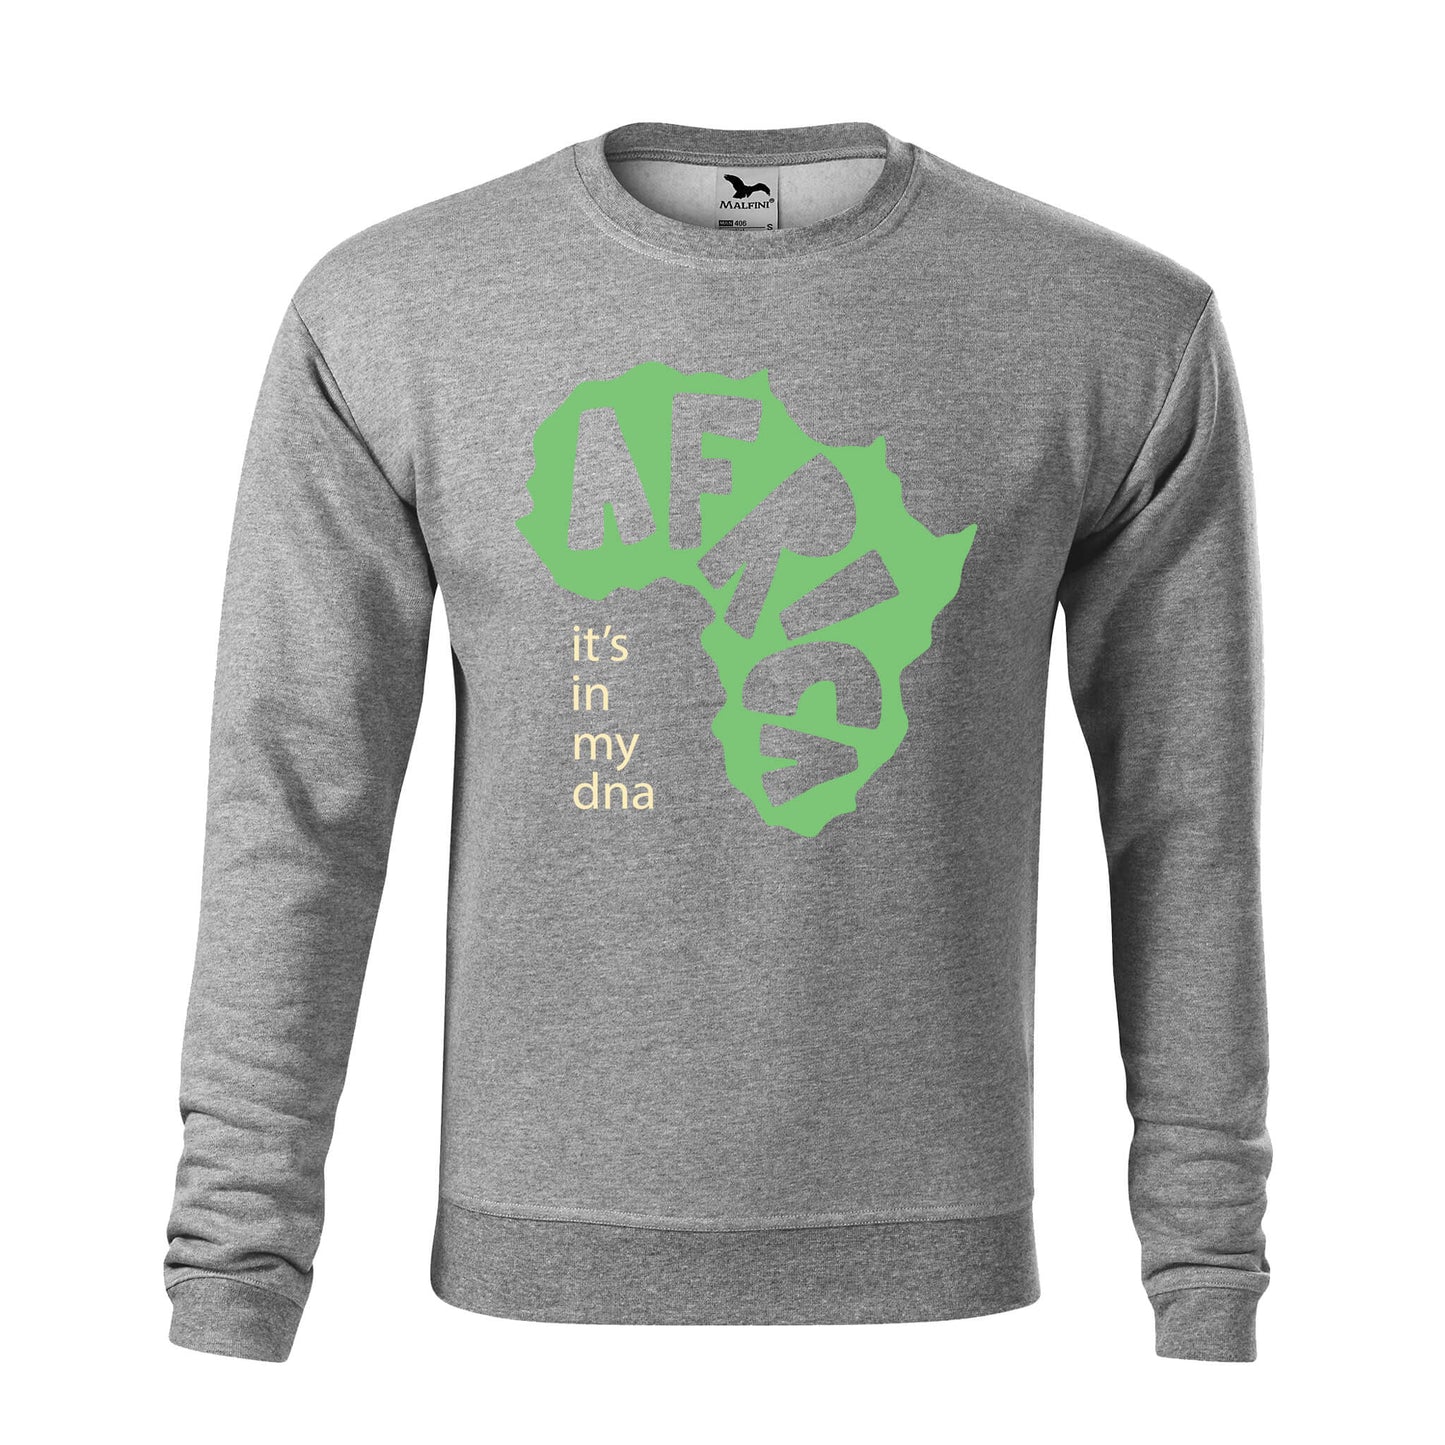 Africa in my dna sweatshirt - rvdesignprint